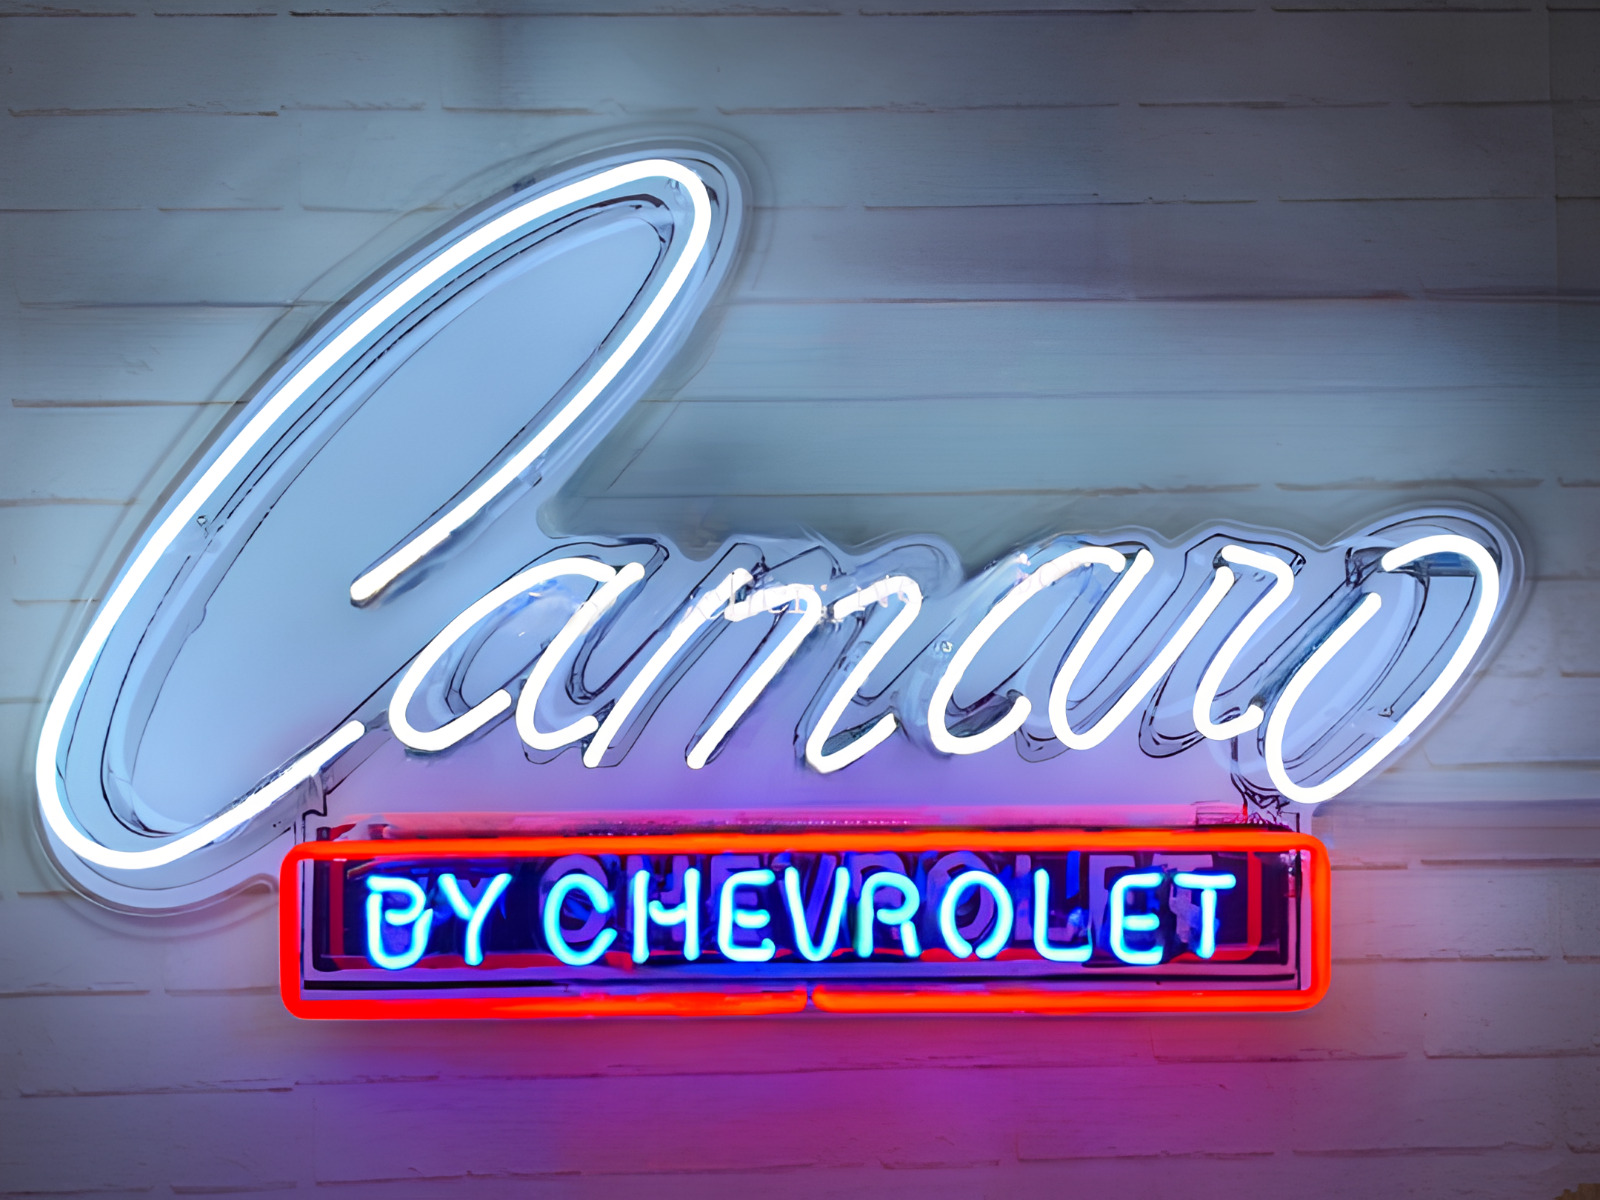 Rare Camaro By Chevrolet Car Service Garage Real Neon Sign Beer Bar Light Lamp